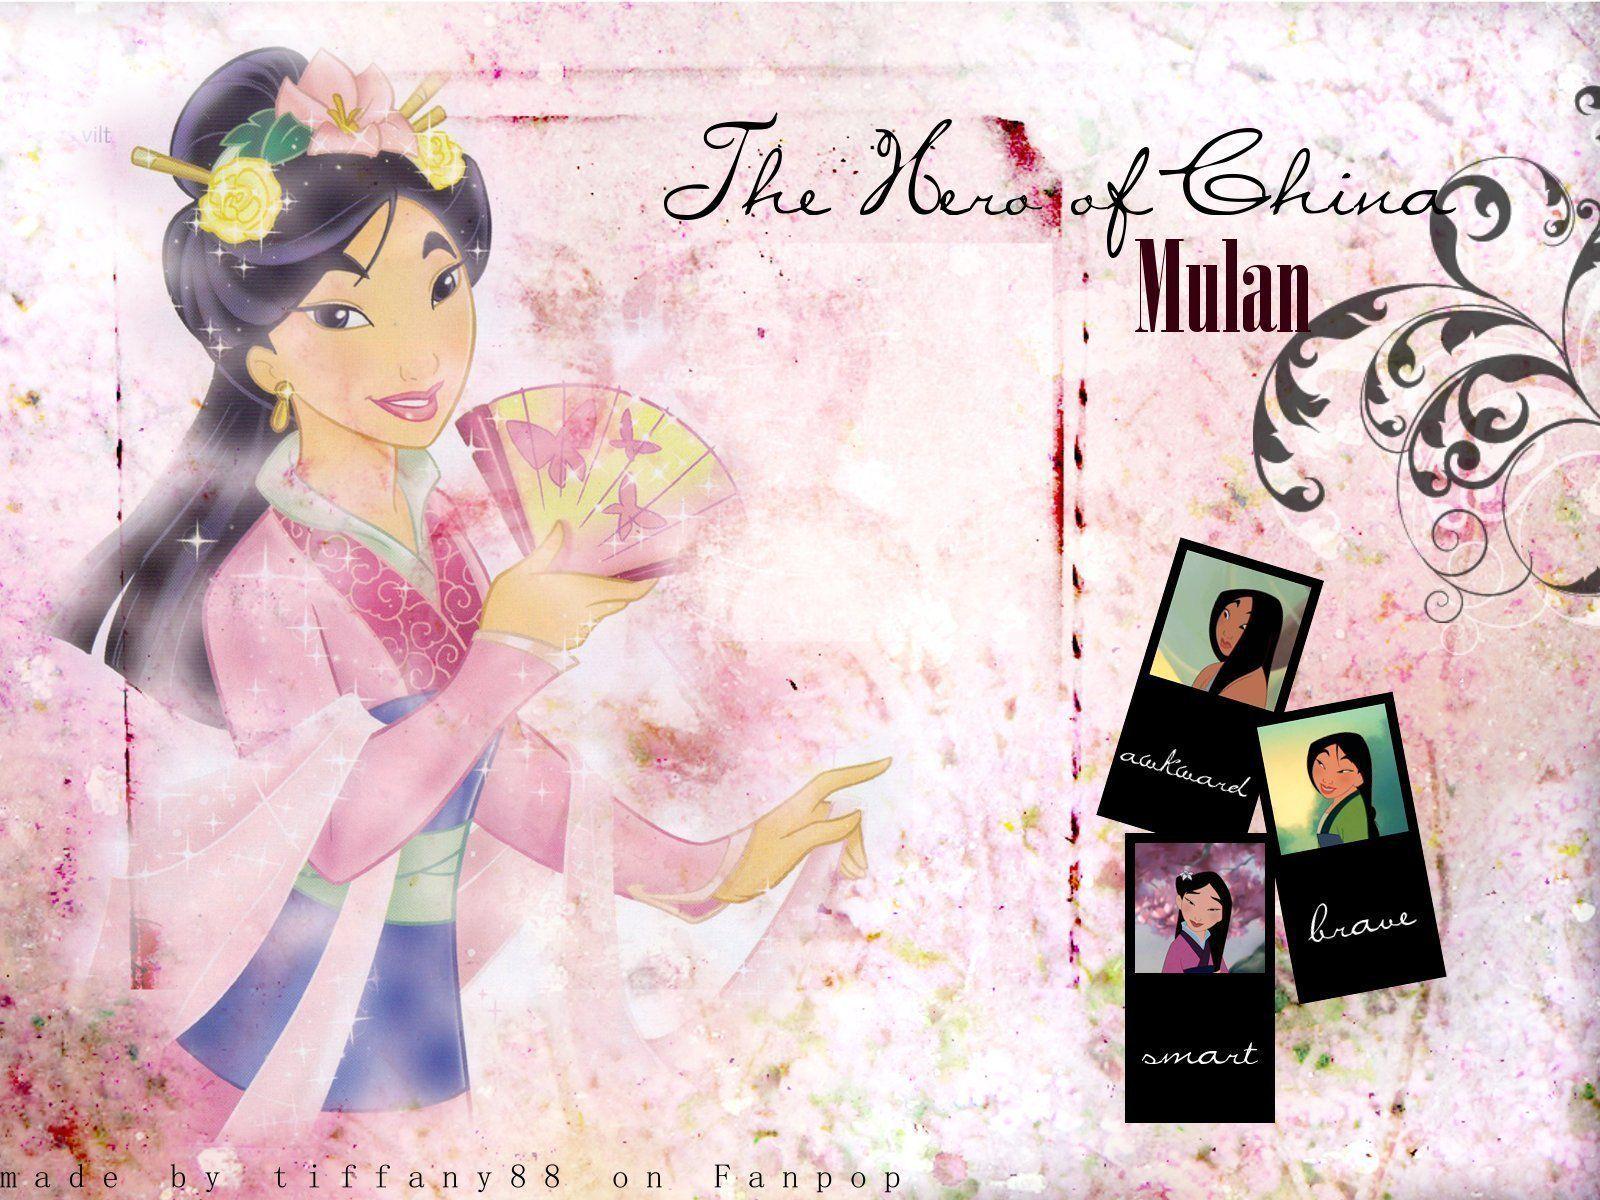 Mulan Princess Wallpaper